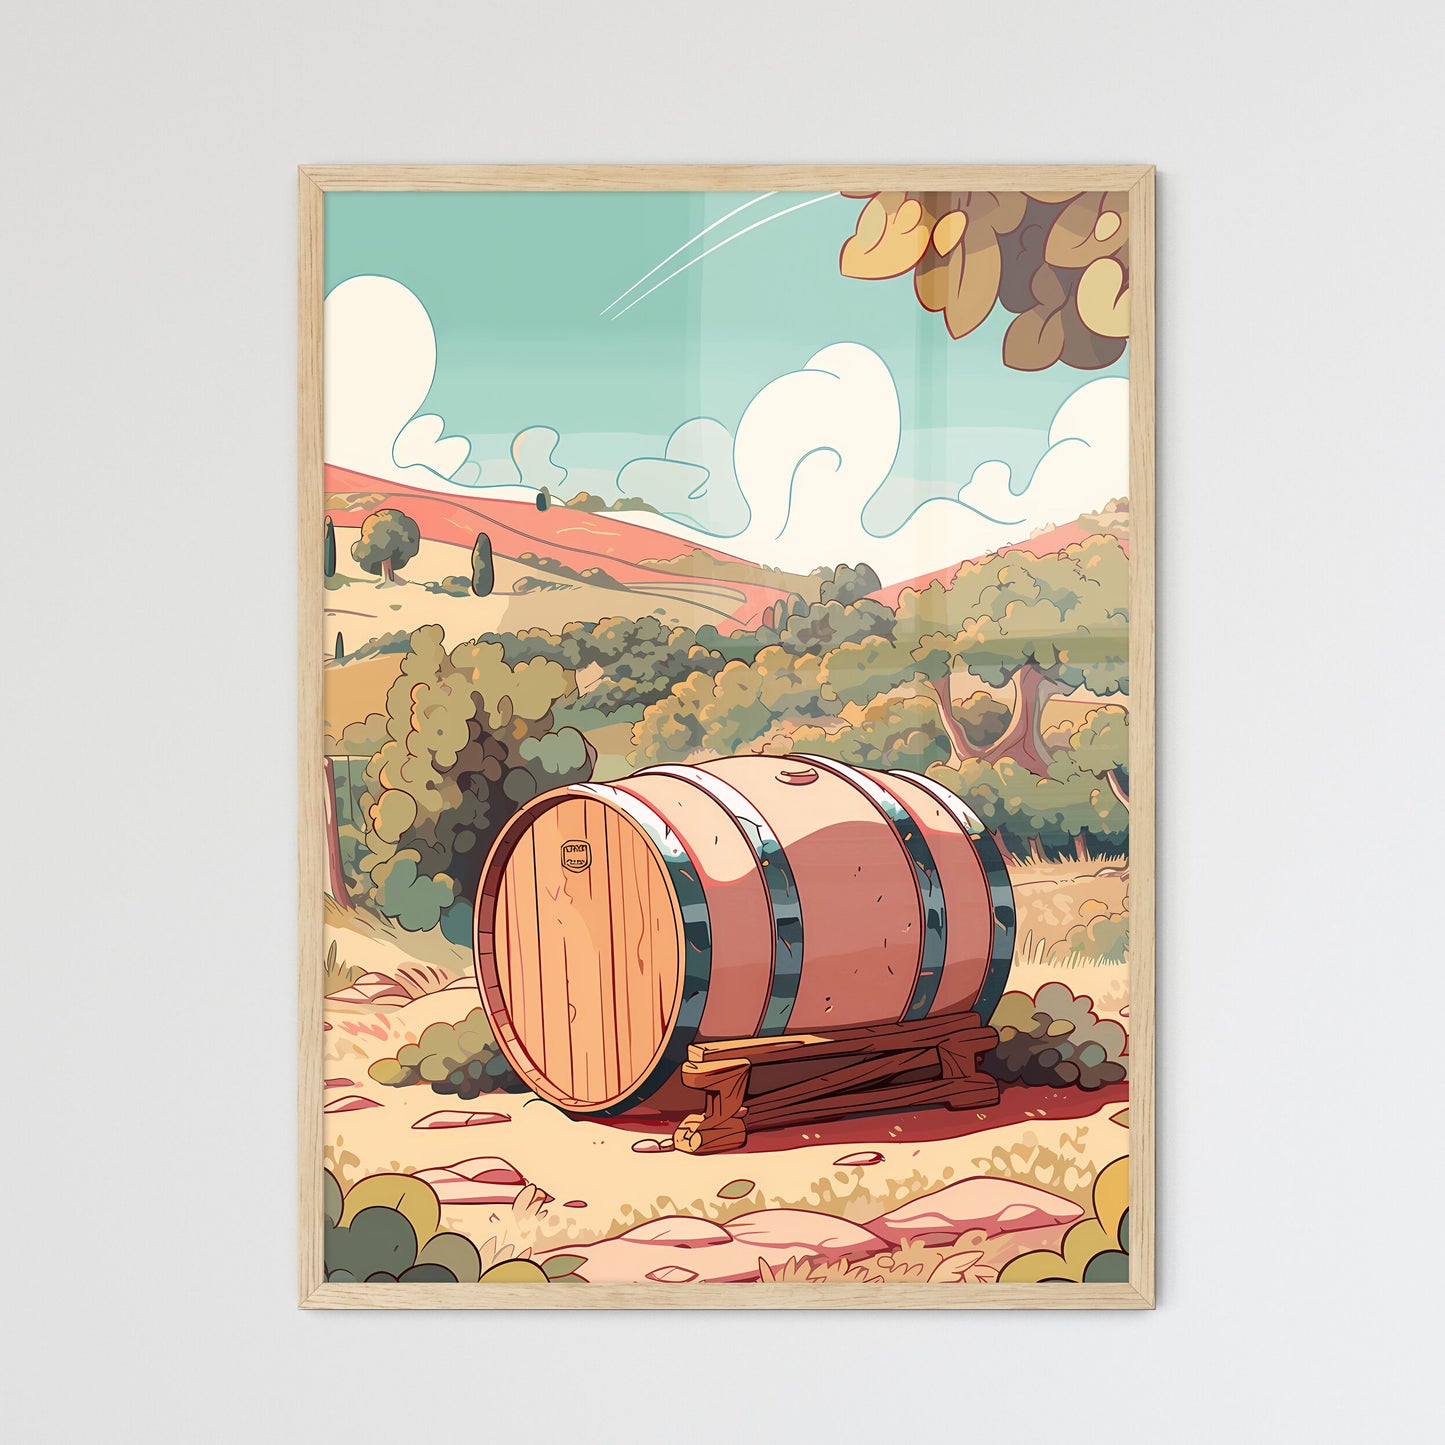 Barrel On A Wooden Stand In A Landscape Art Print Default Title